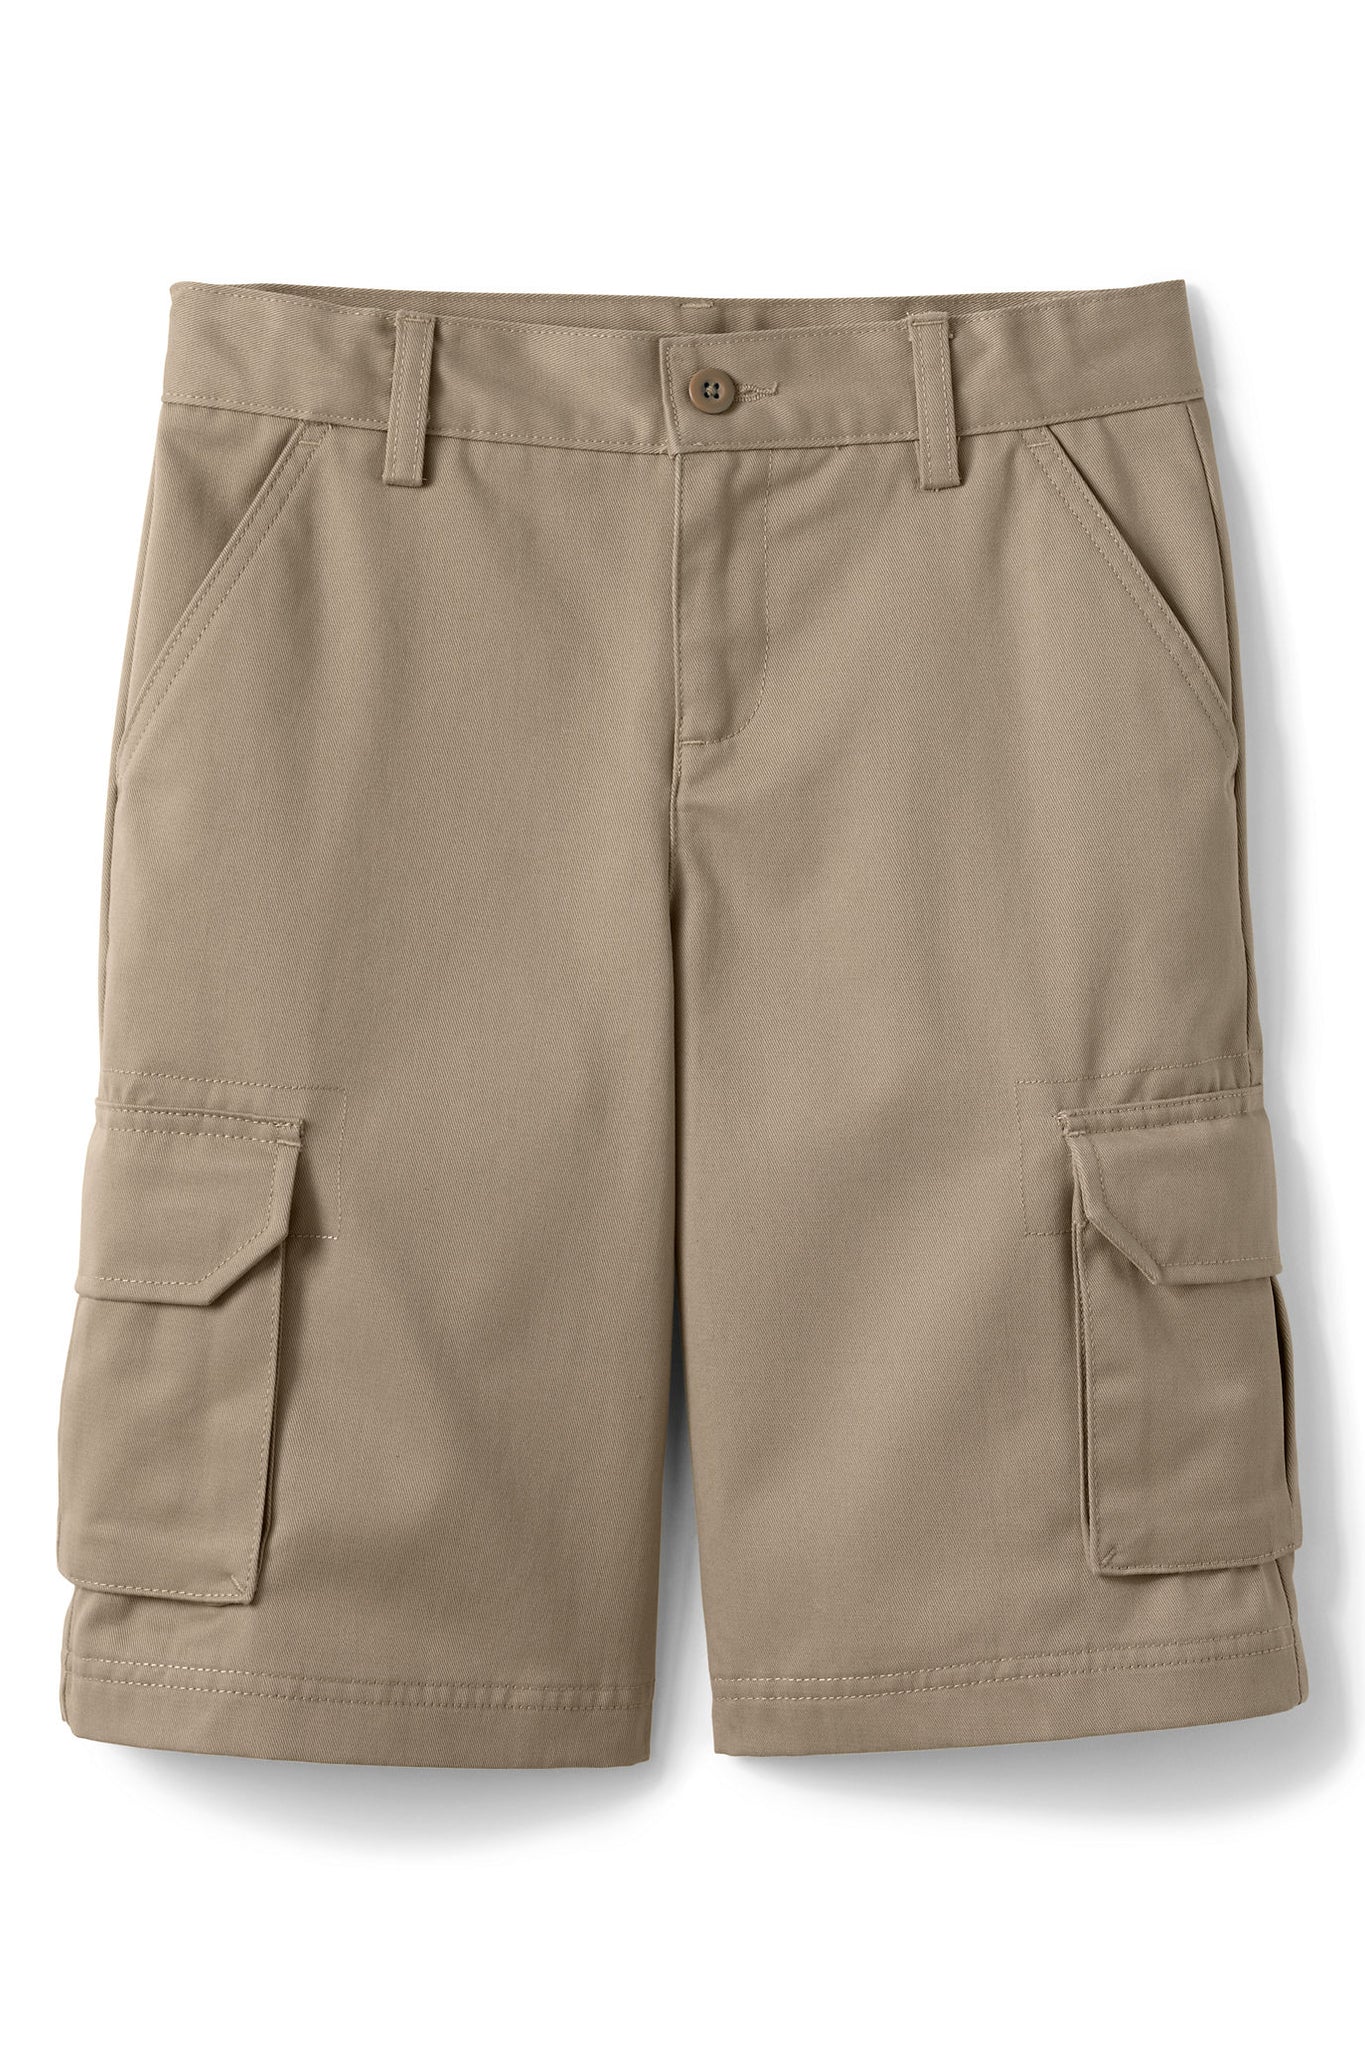 Boys Cargo Shorts - Navy